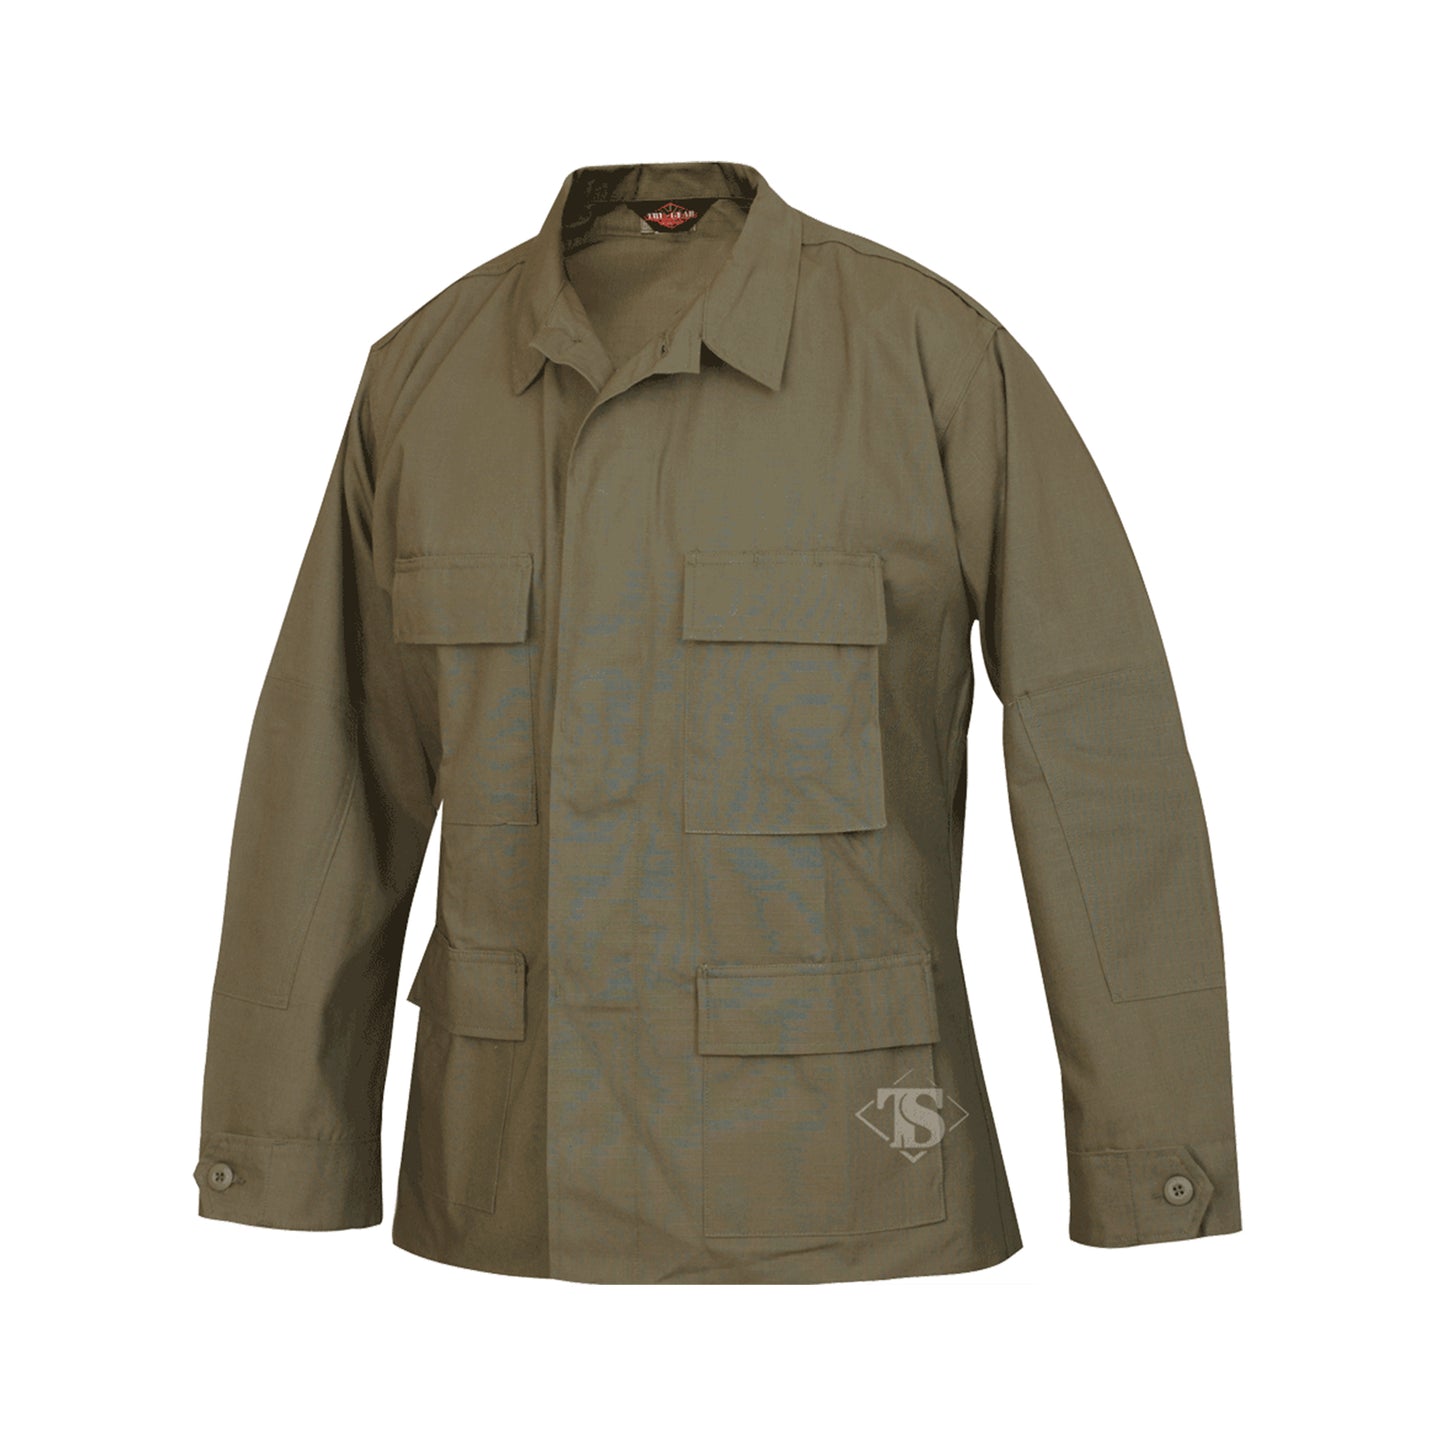 Solid Color BDU Coat, 100% Cotton Rip-Stop From Tru-Spec